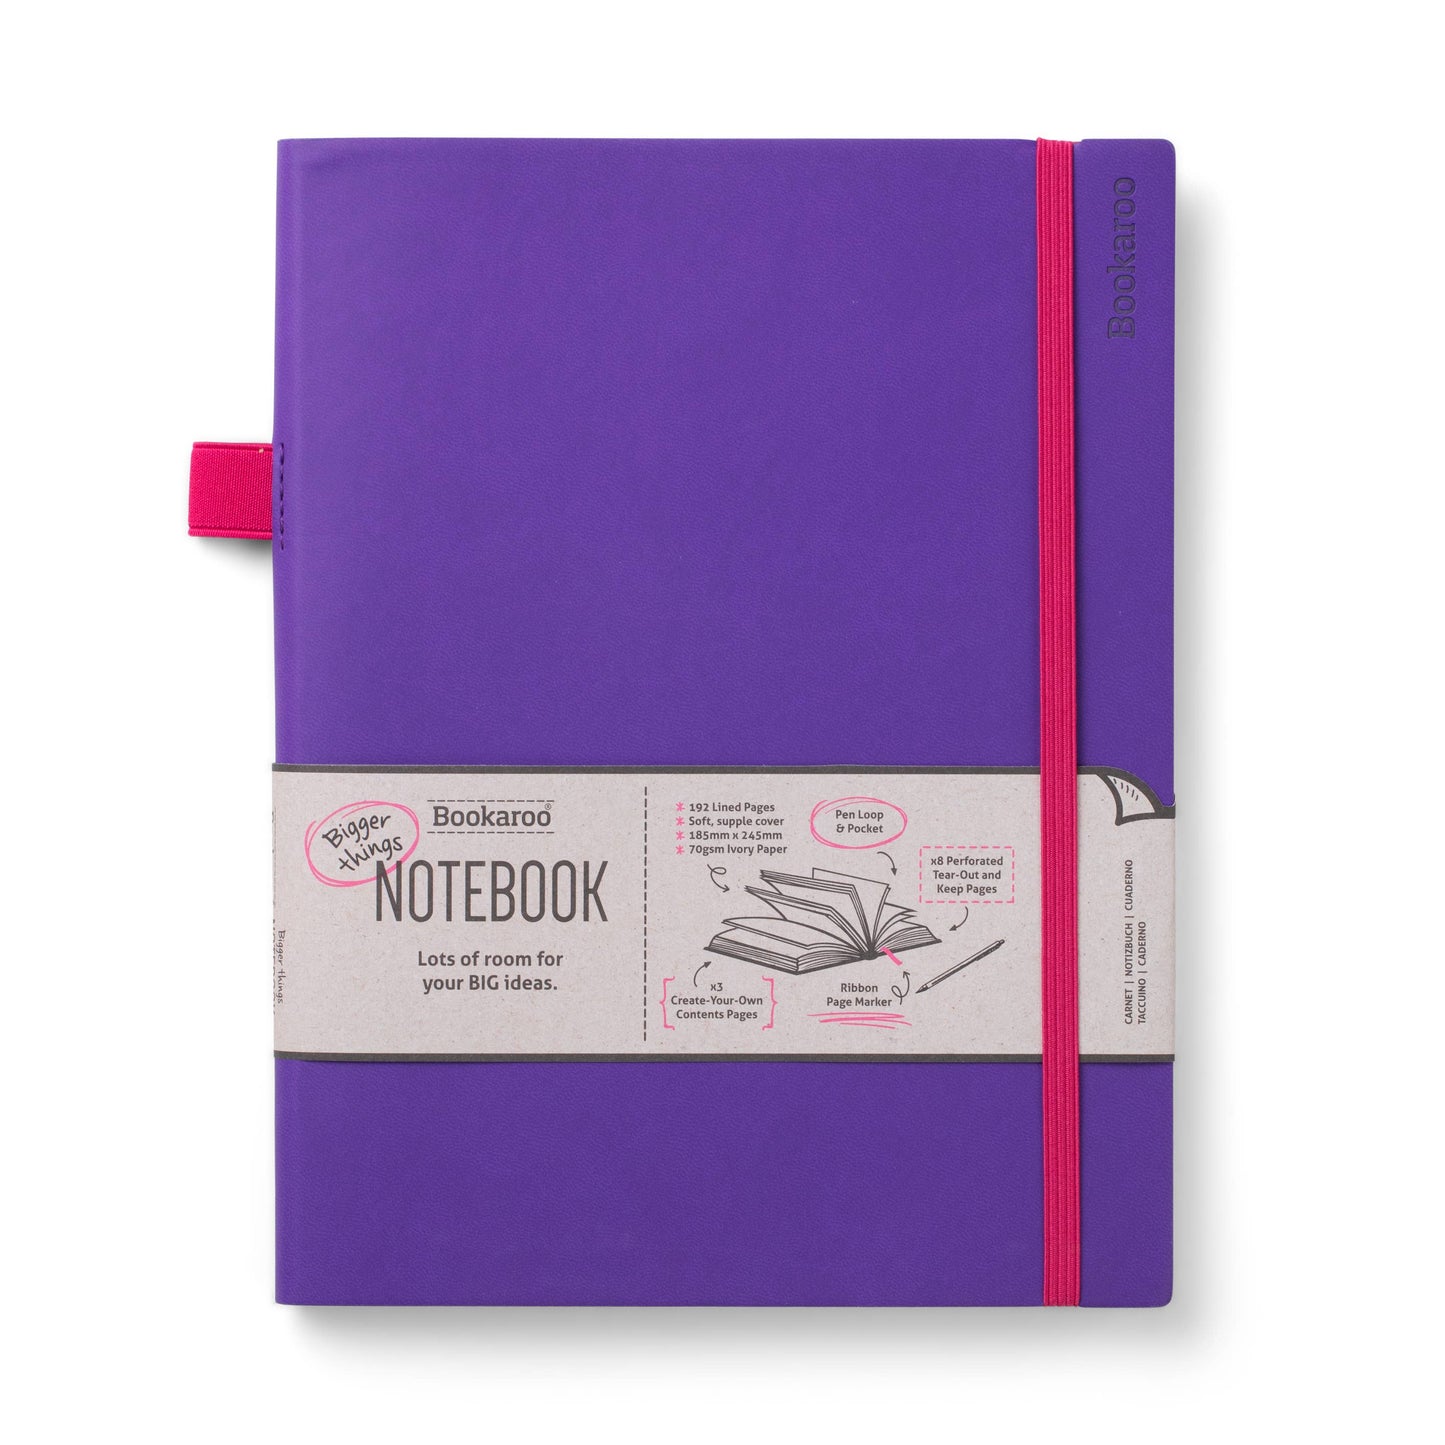 Bookaroo Bigger Things Notebook: Navy